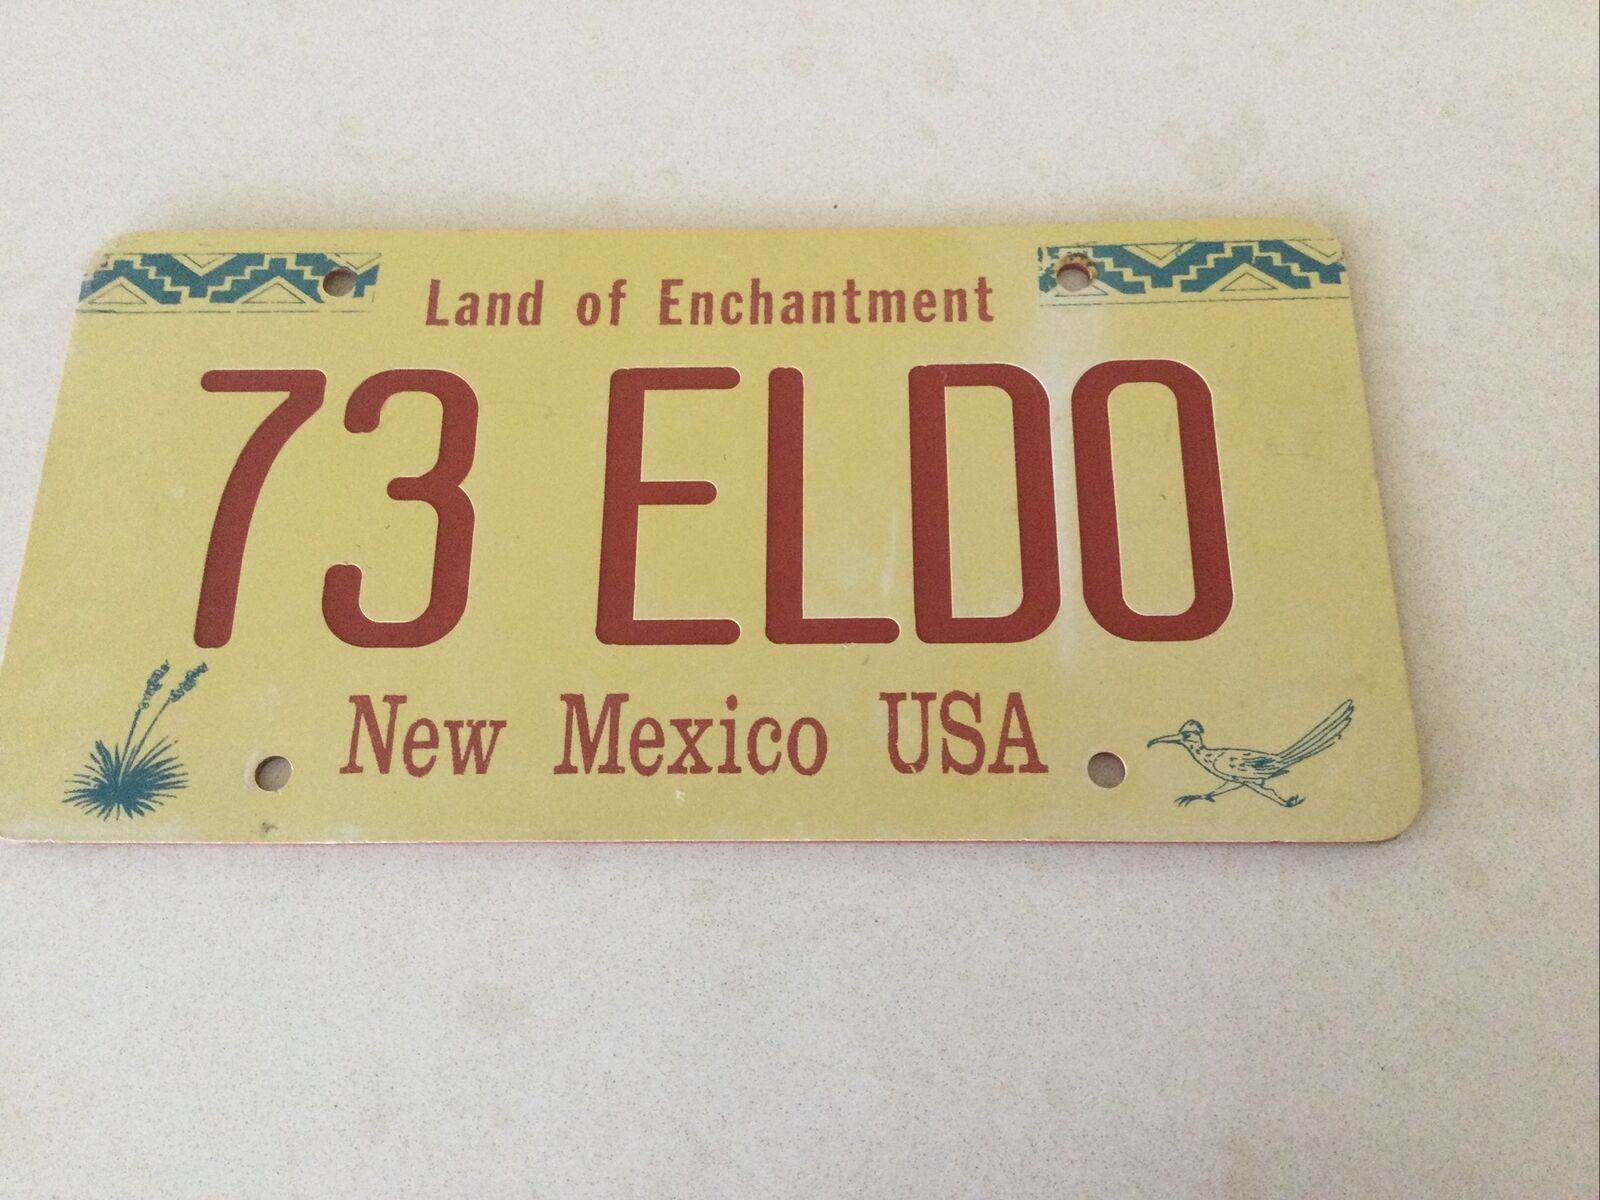 New Mexico Novelty License Plate. “73 ELDO” Land Of Enchantment.